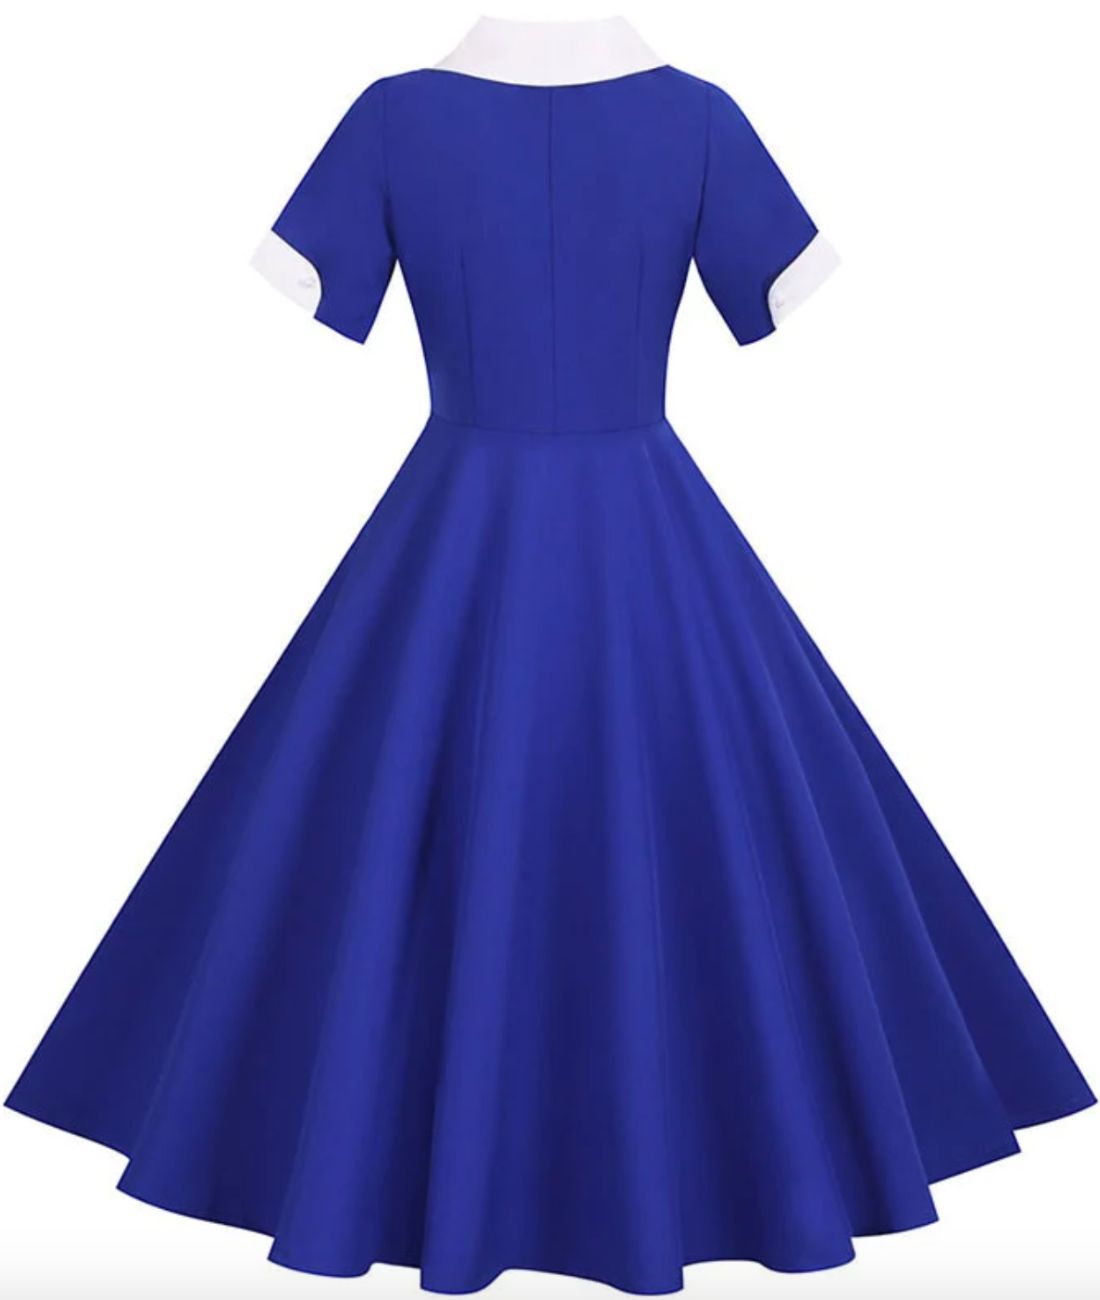 Robe Années 50 Chic Bleu - Madame Vintage